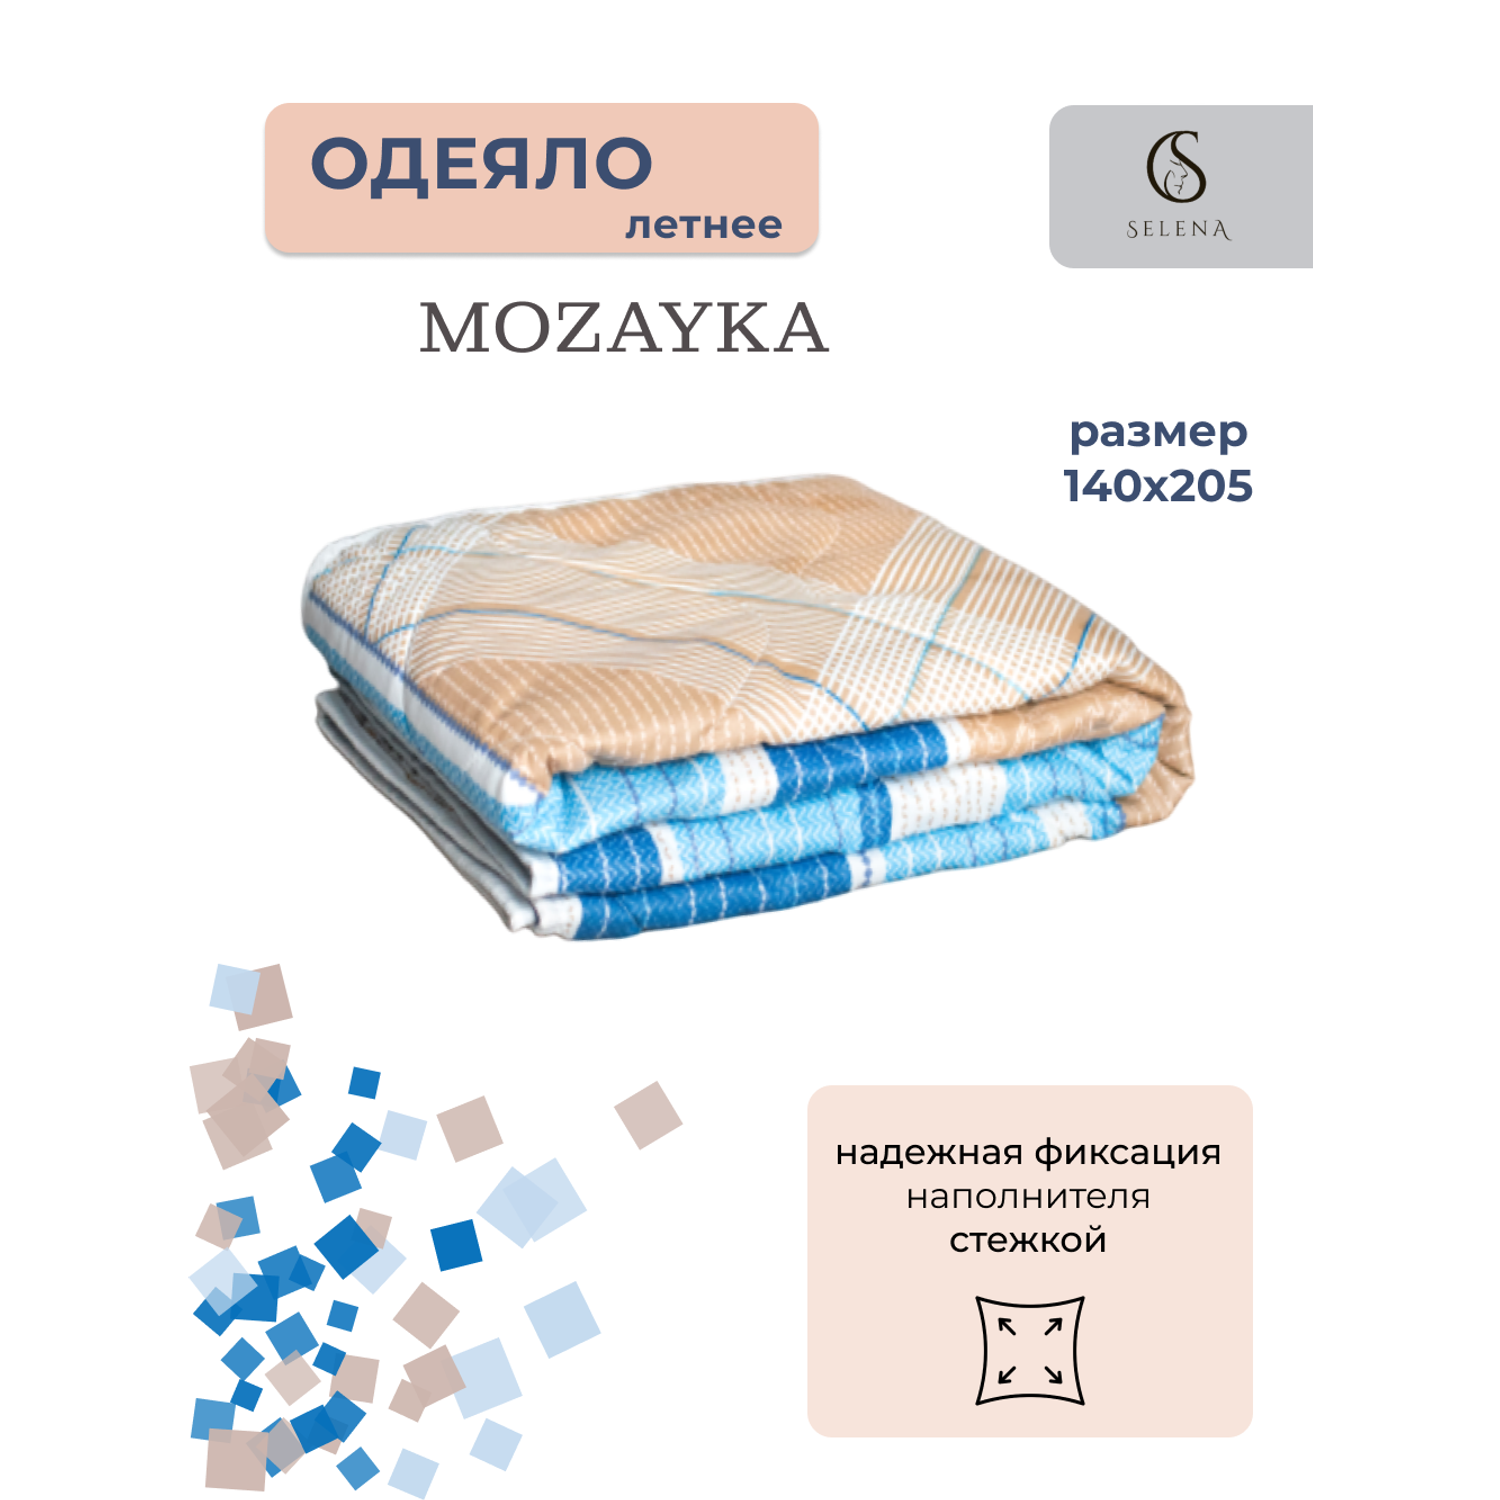 Одеяло SELENA Mozayka всесезонное 140х205 см - фото 1